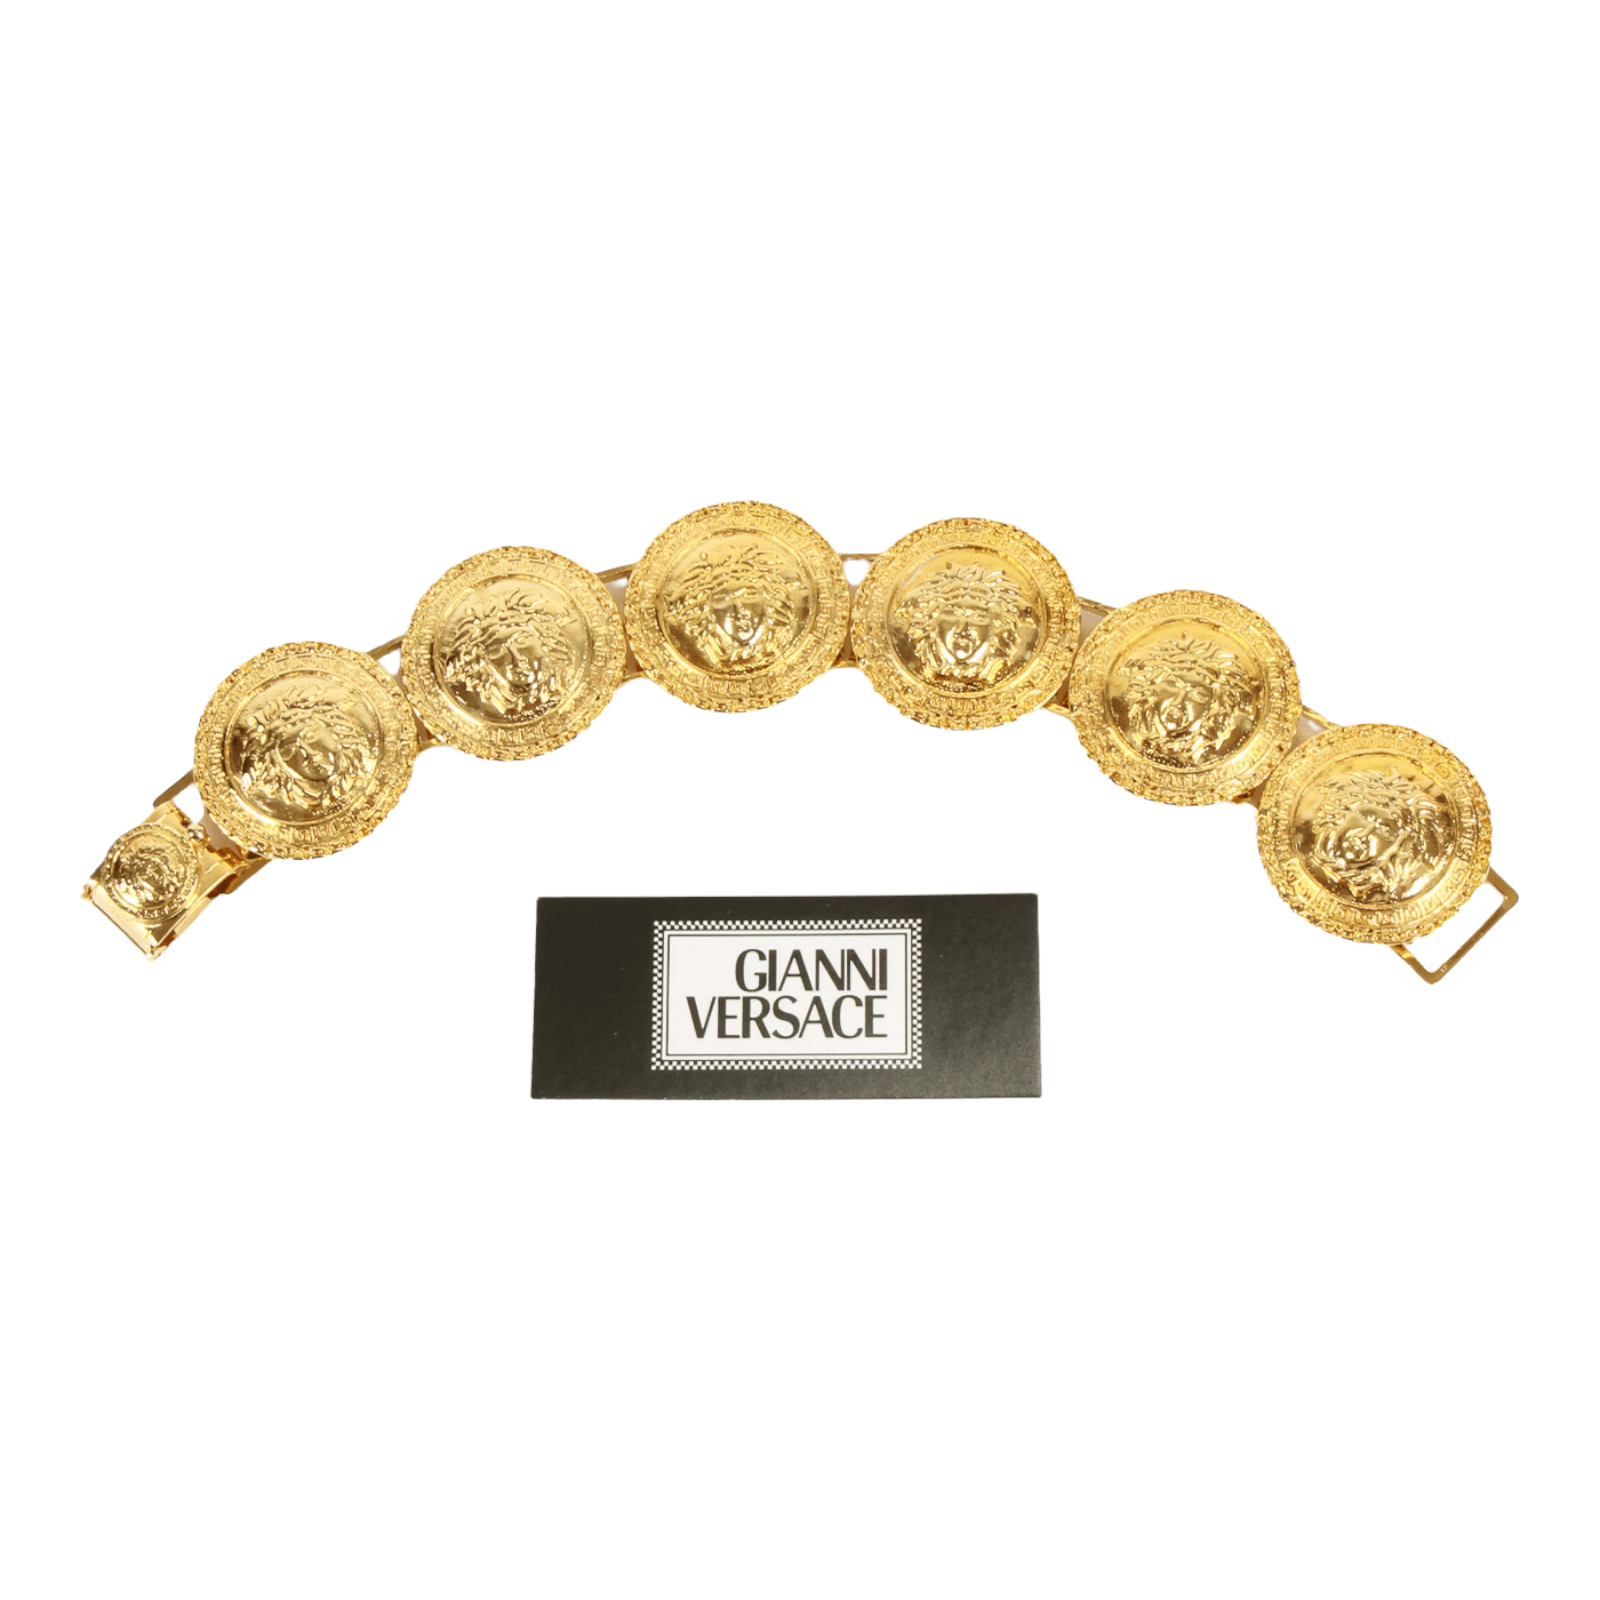 GIANNI VERSACE 18K Gold Medusa Coin Charm Bracelet #002 Limited Edition  120grams